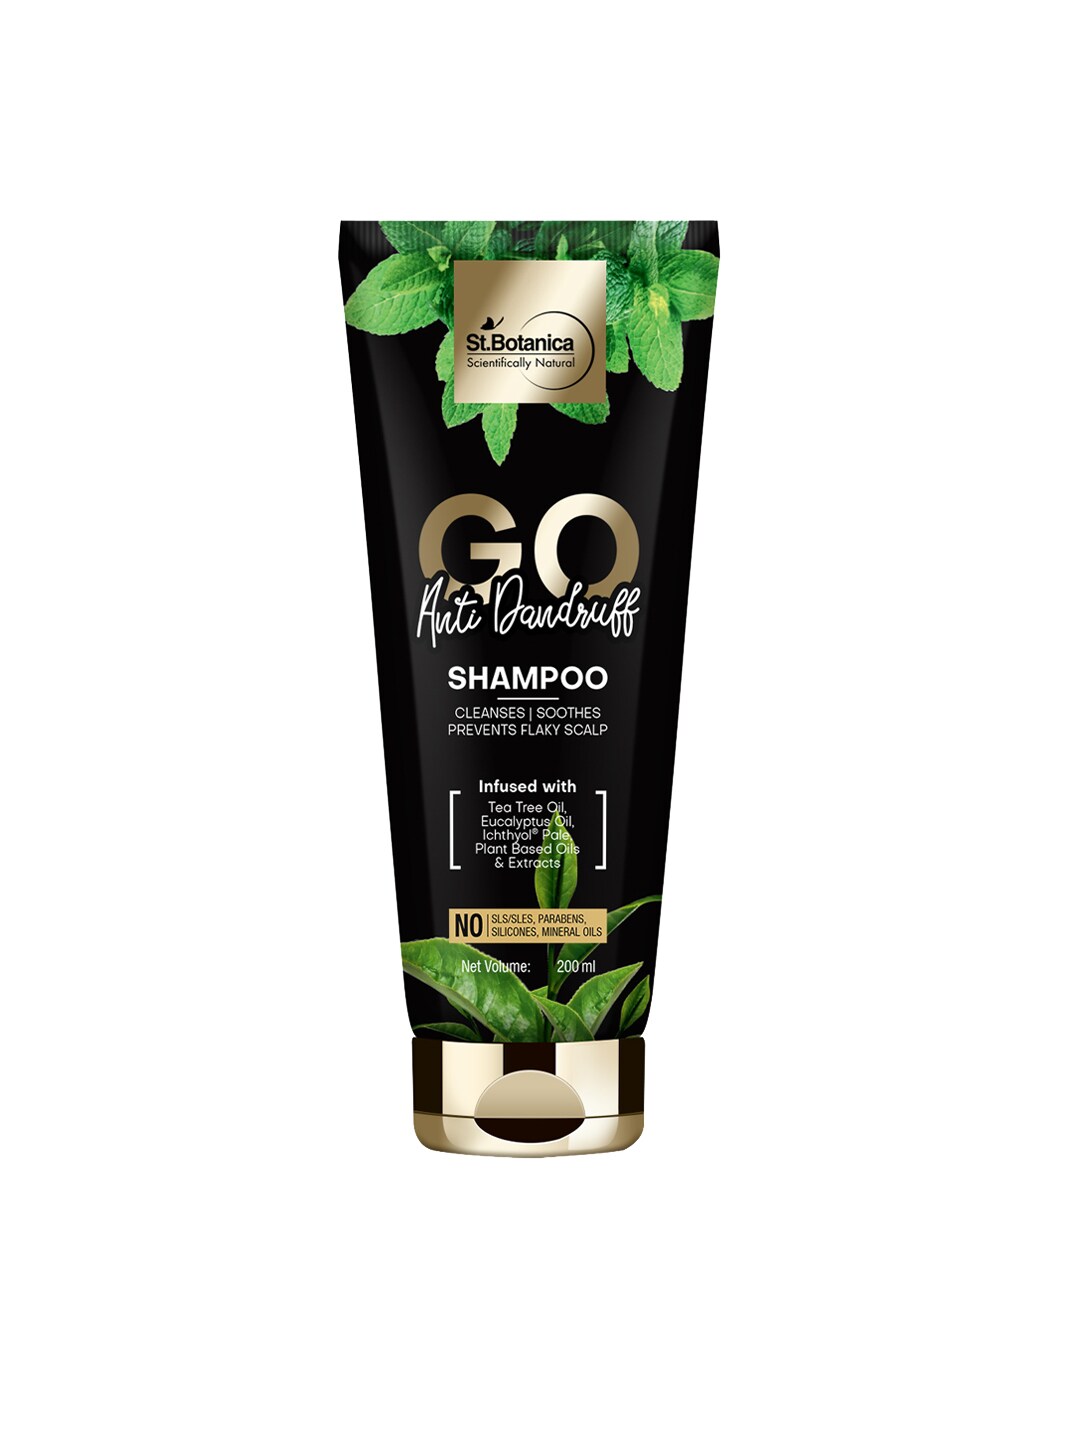 StBotanica Go Anti-Dandruff Shampoo 200ml Price in India